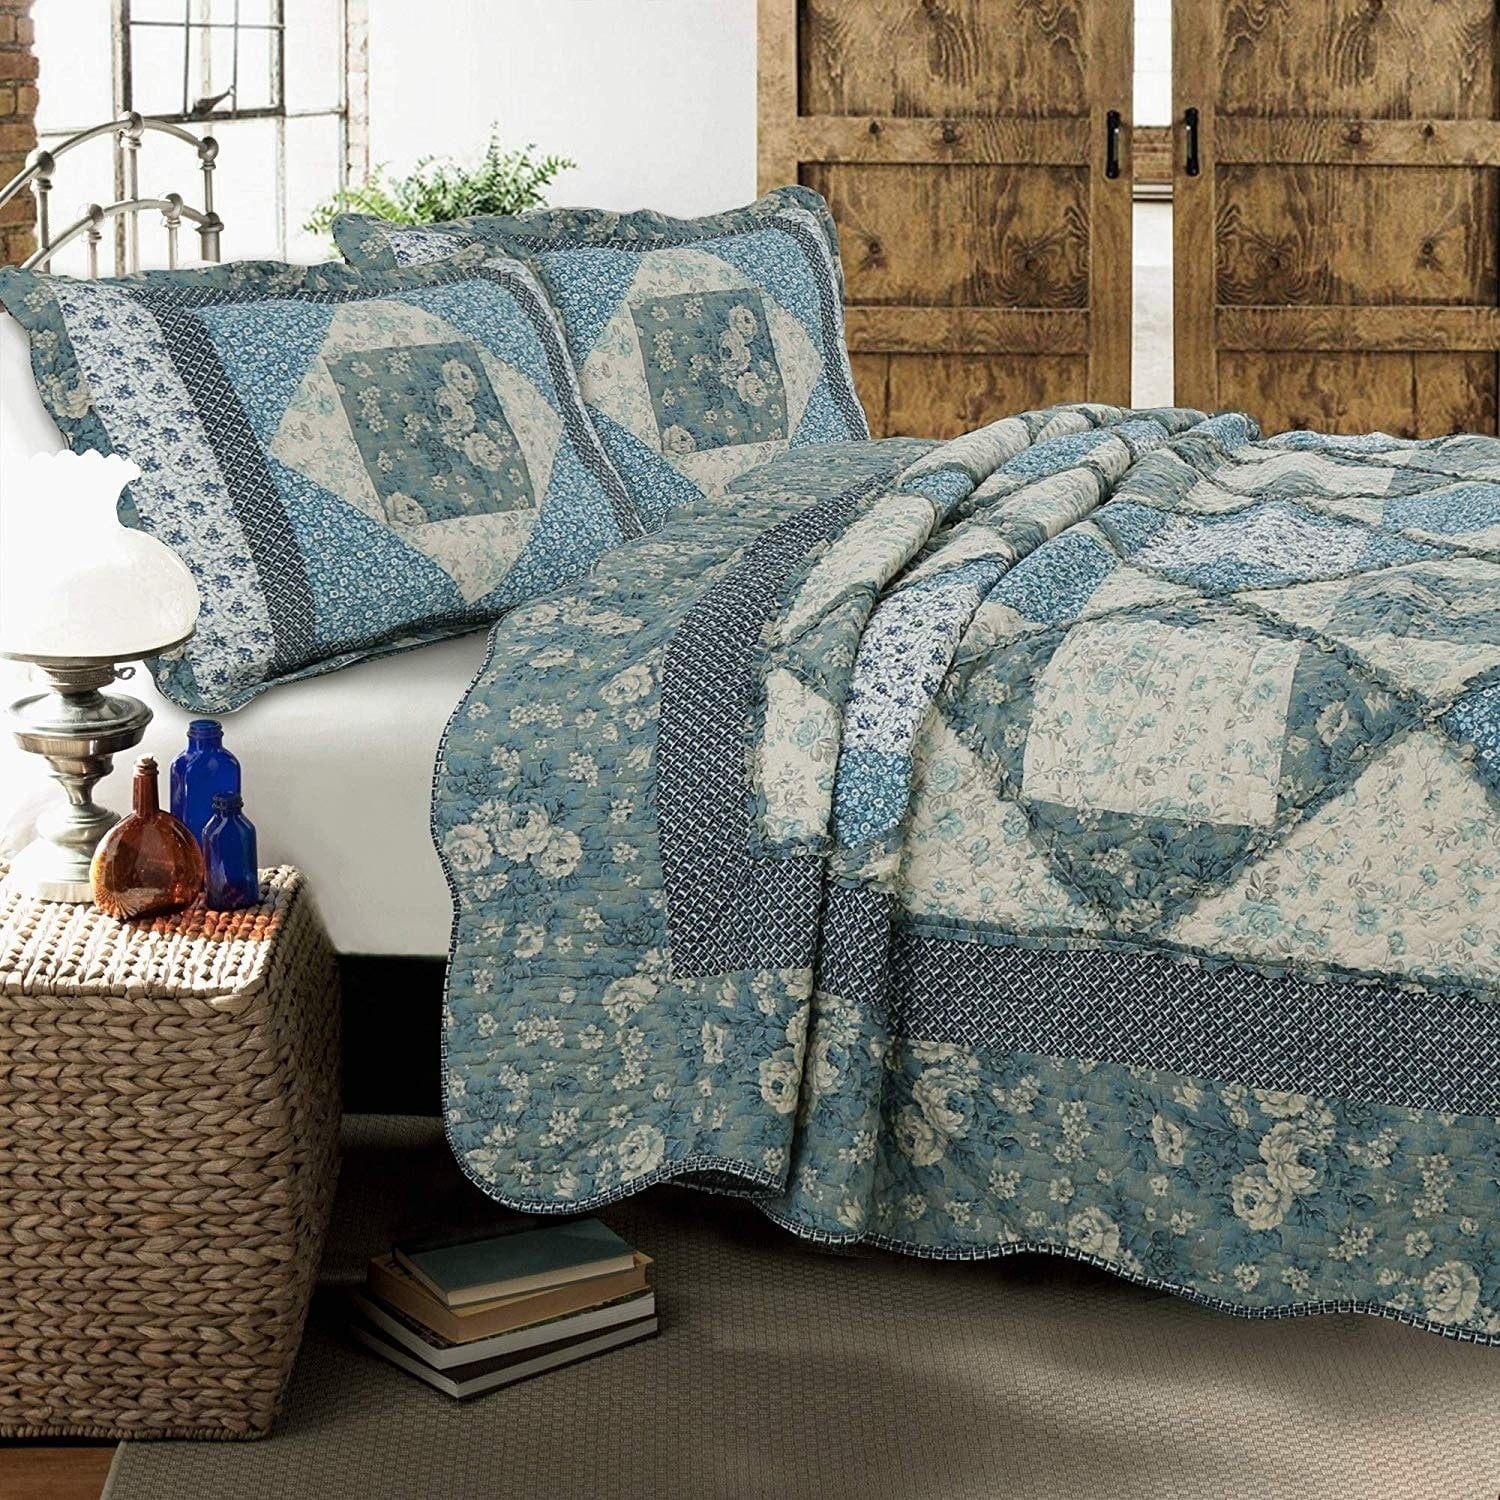 Laura Burgundy Real Patchwork Reversible 100%Cotton Quilt Set Bedspread Coverlet 